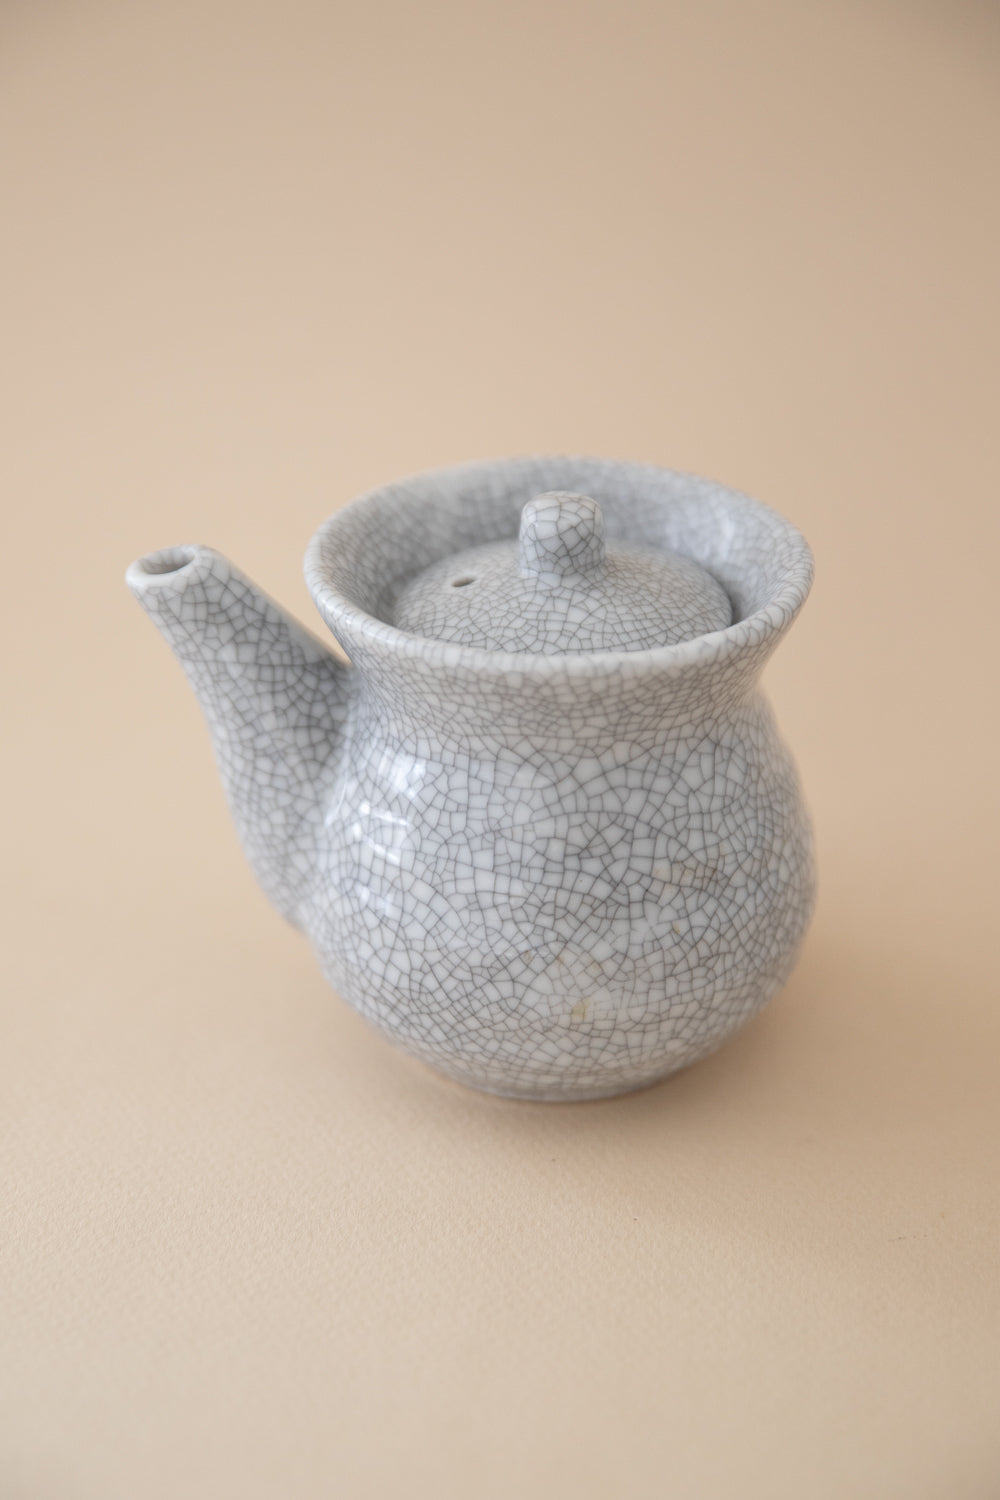 Single Cup Teapot